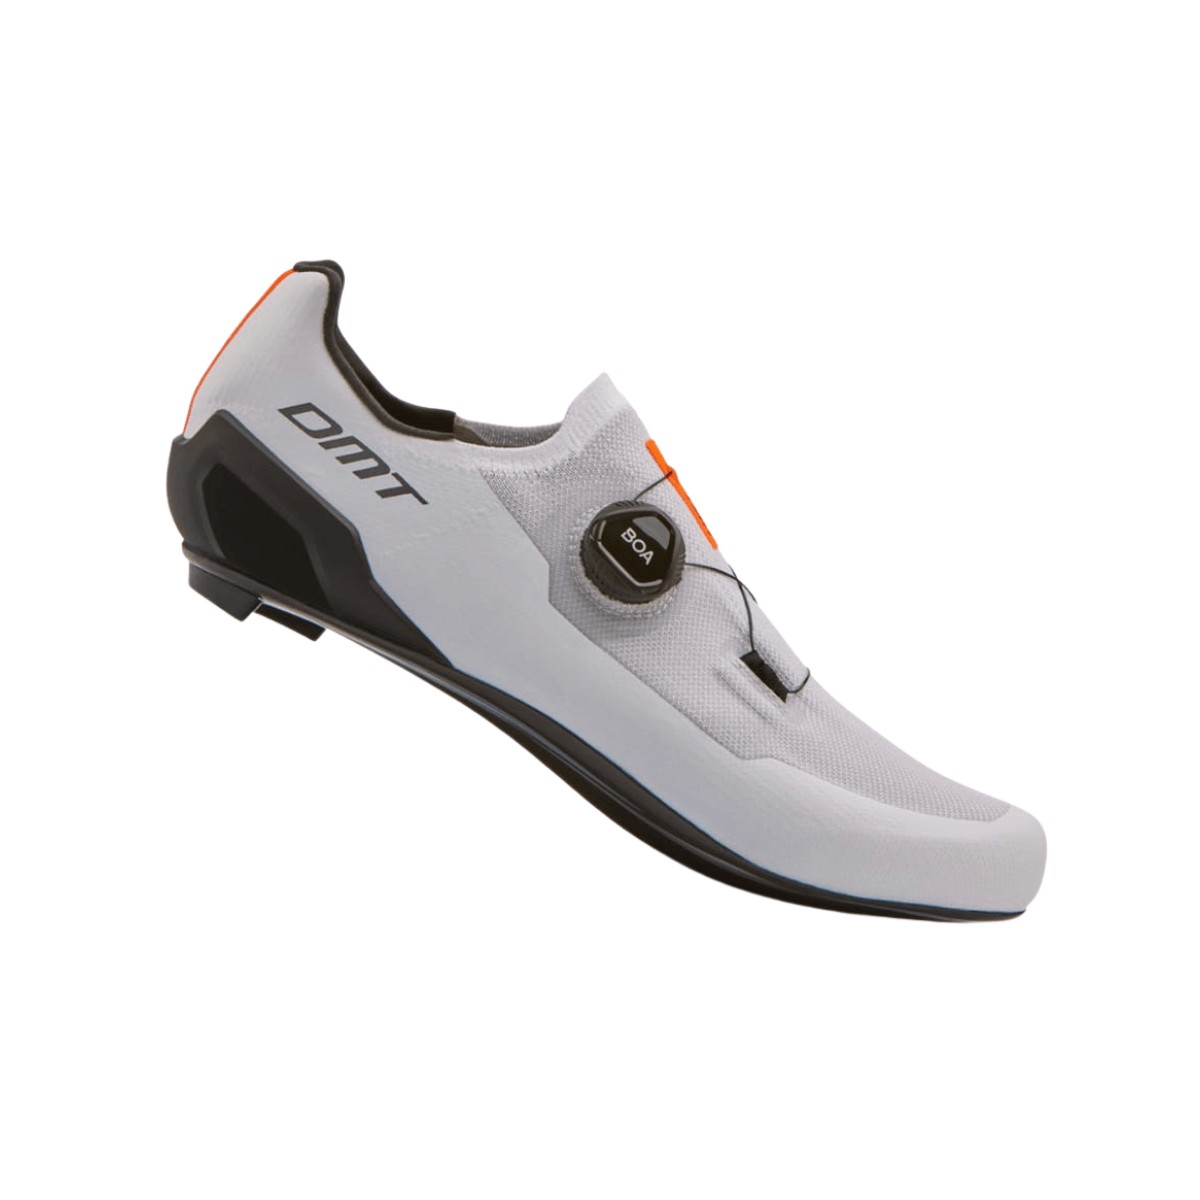 Shoes DMT KR30 White Black AW22, Size 42 - EUR